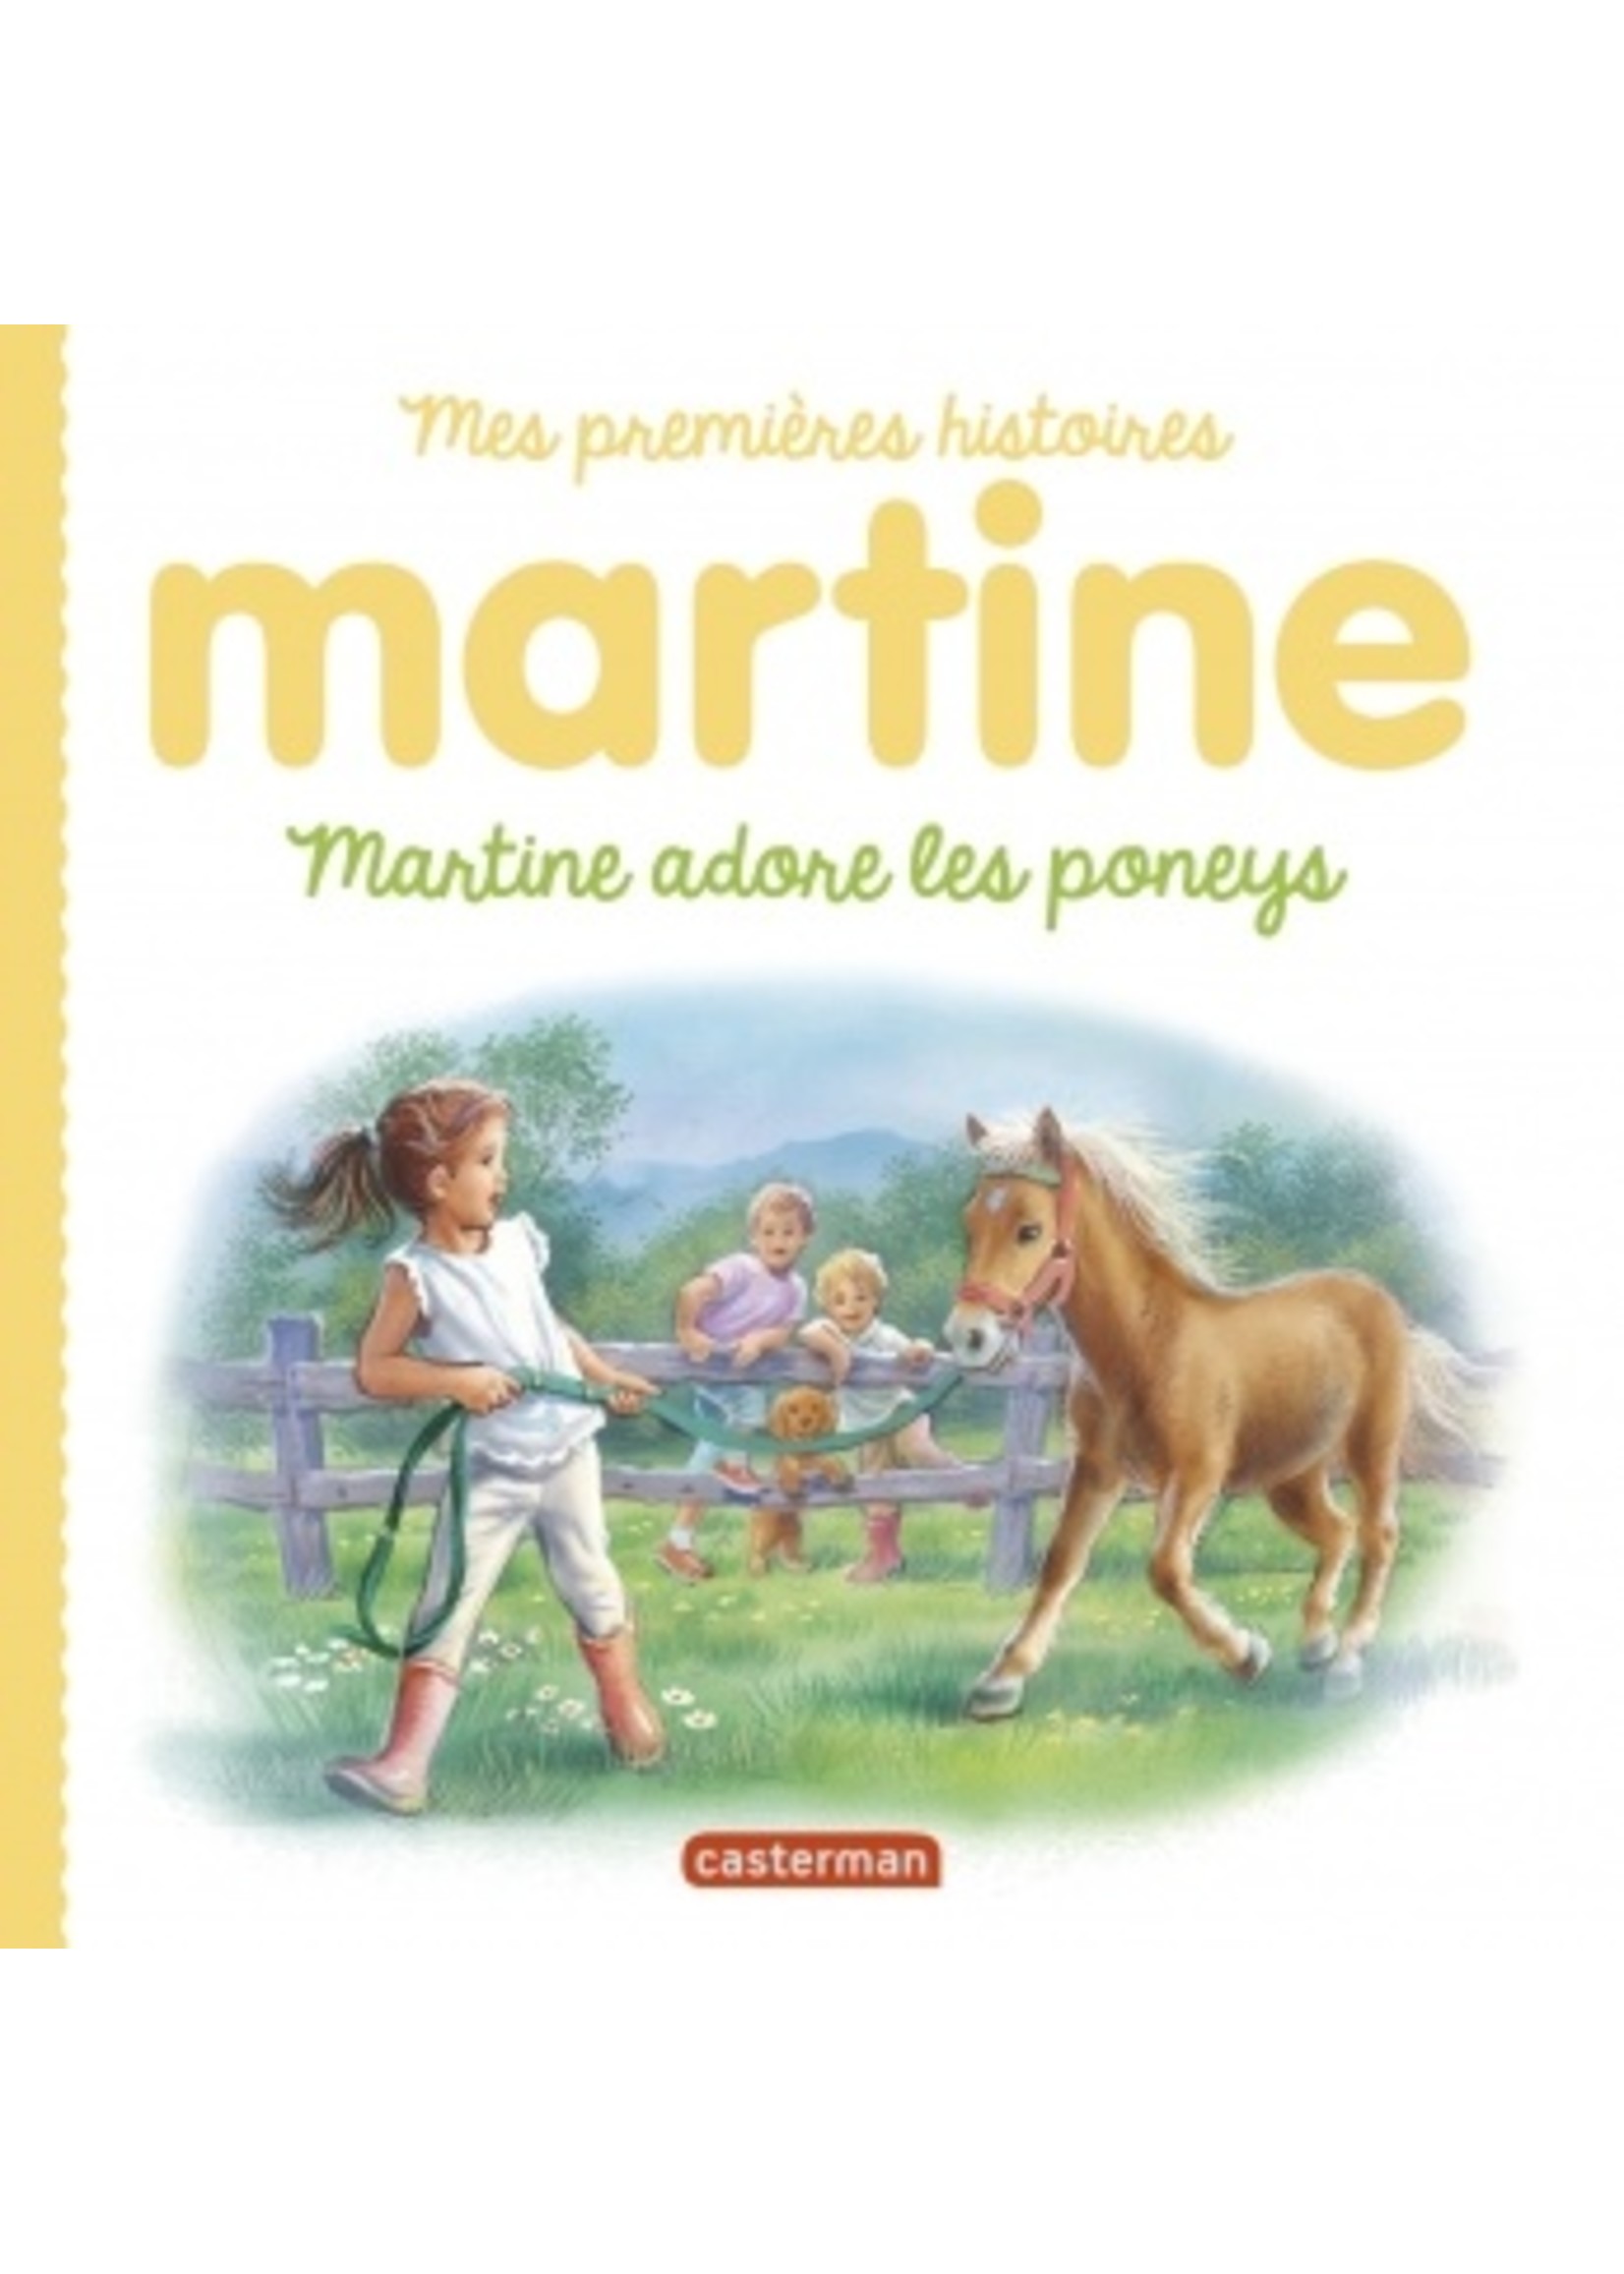 Casterman Martine adore les poney